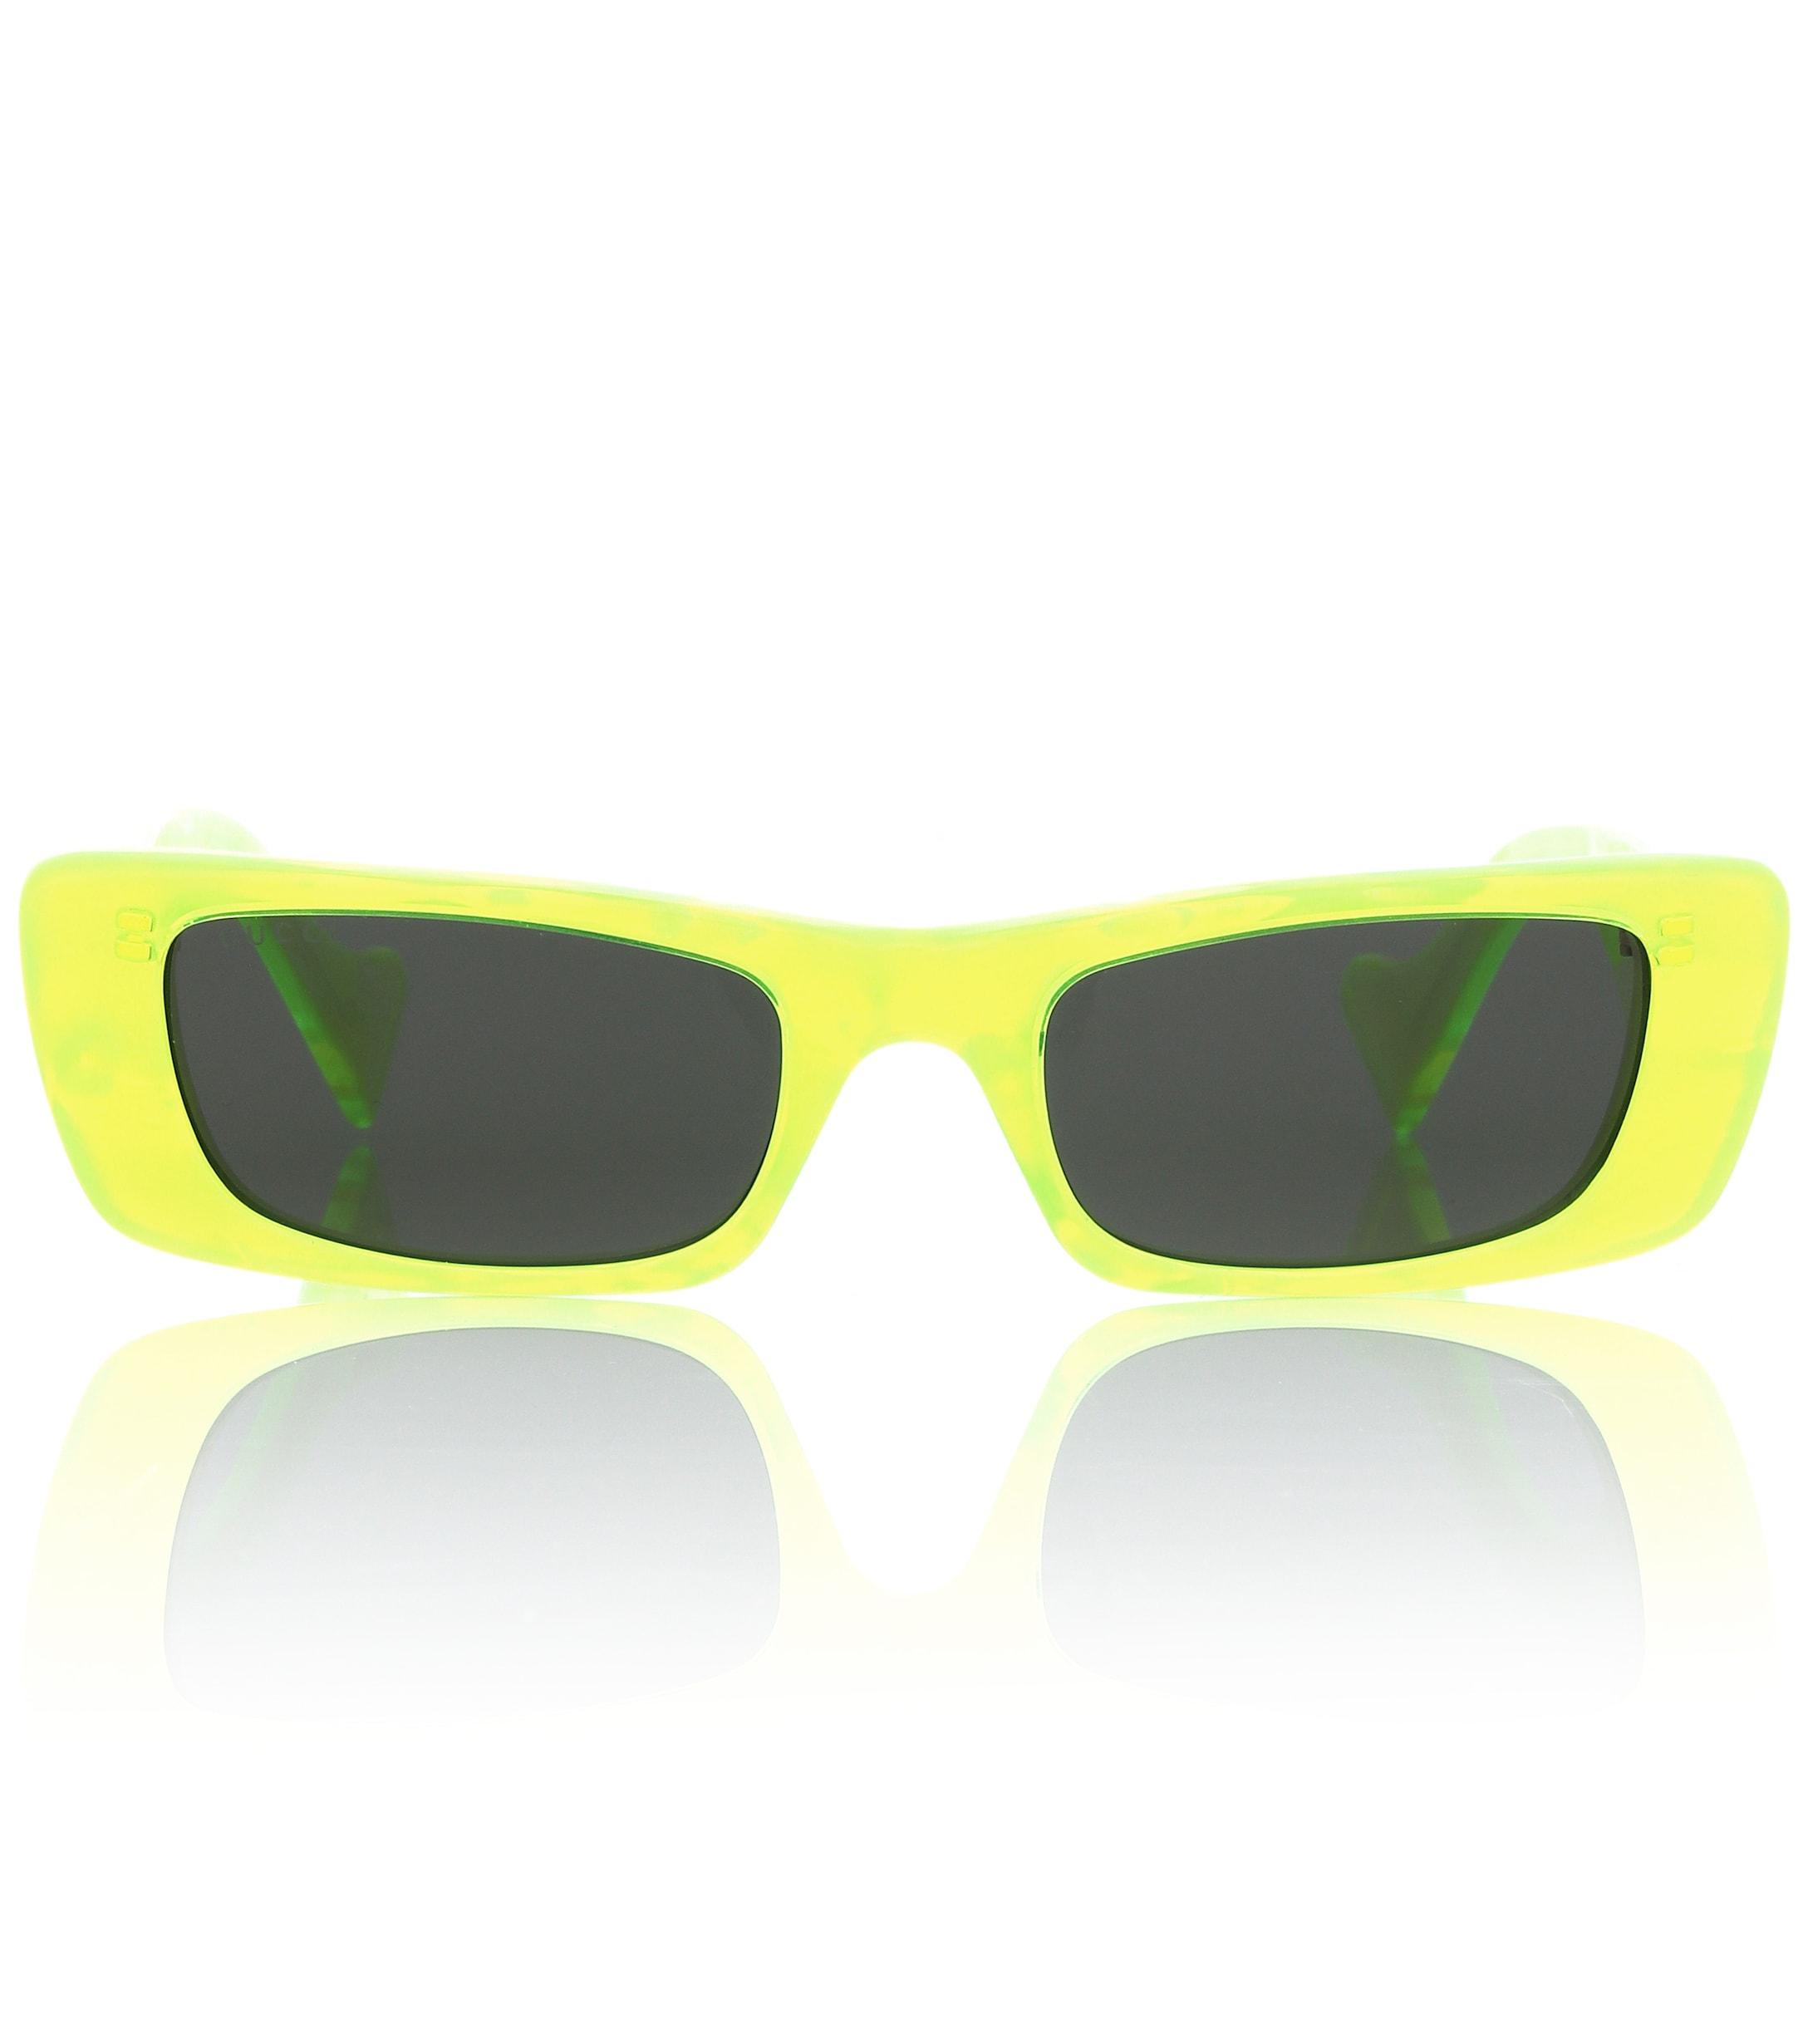 Gucci Rectangular Acetate Sunglasses in Yellow - Lyst